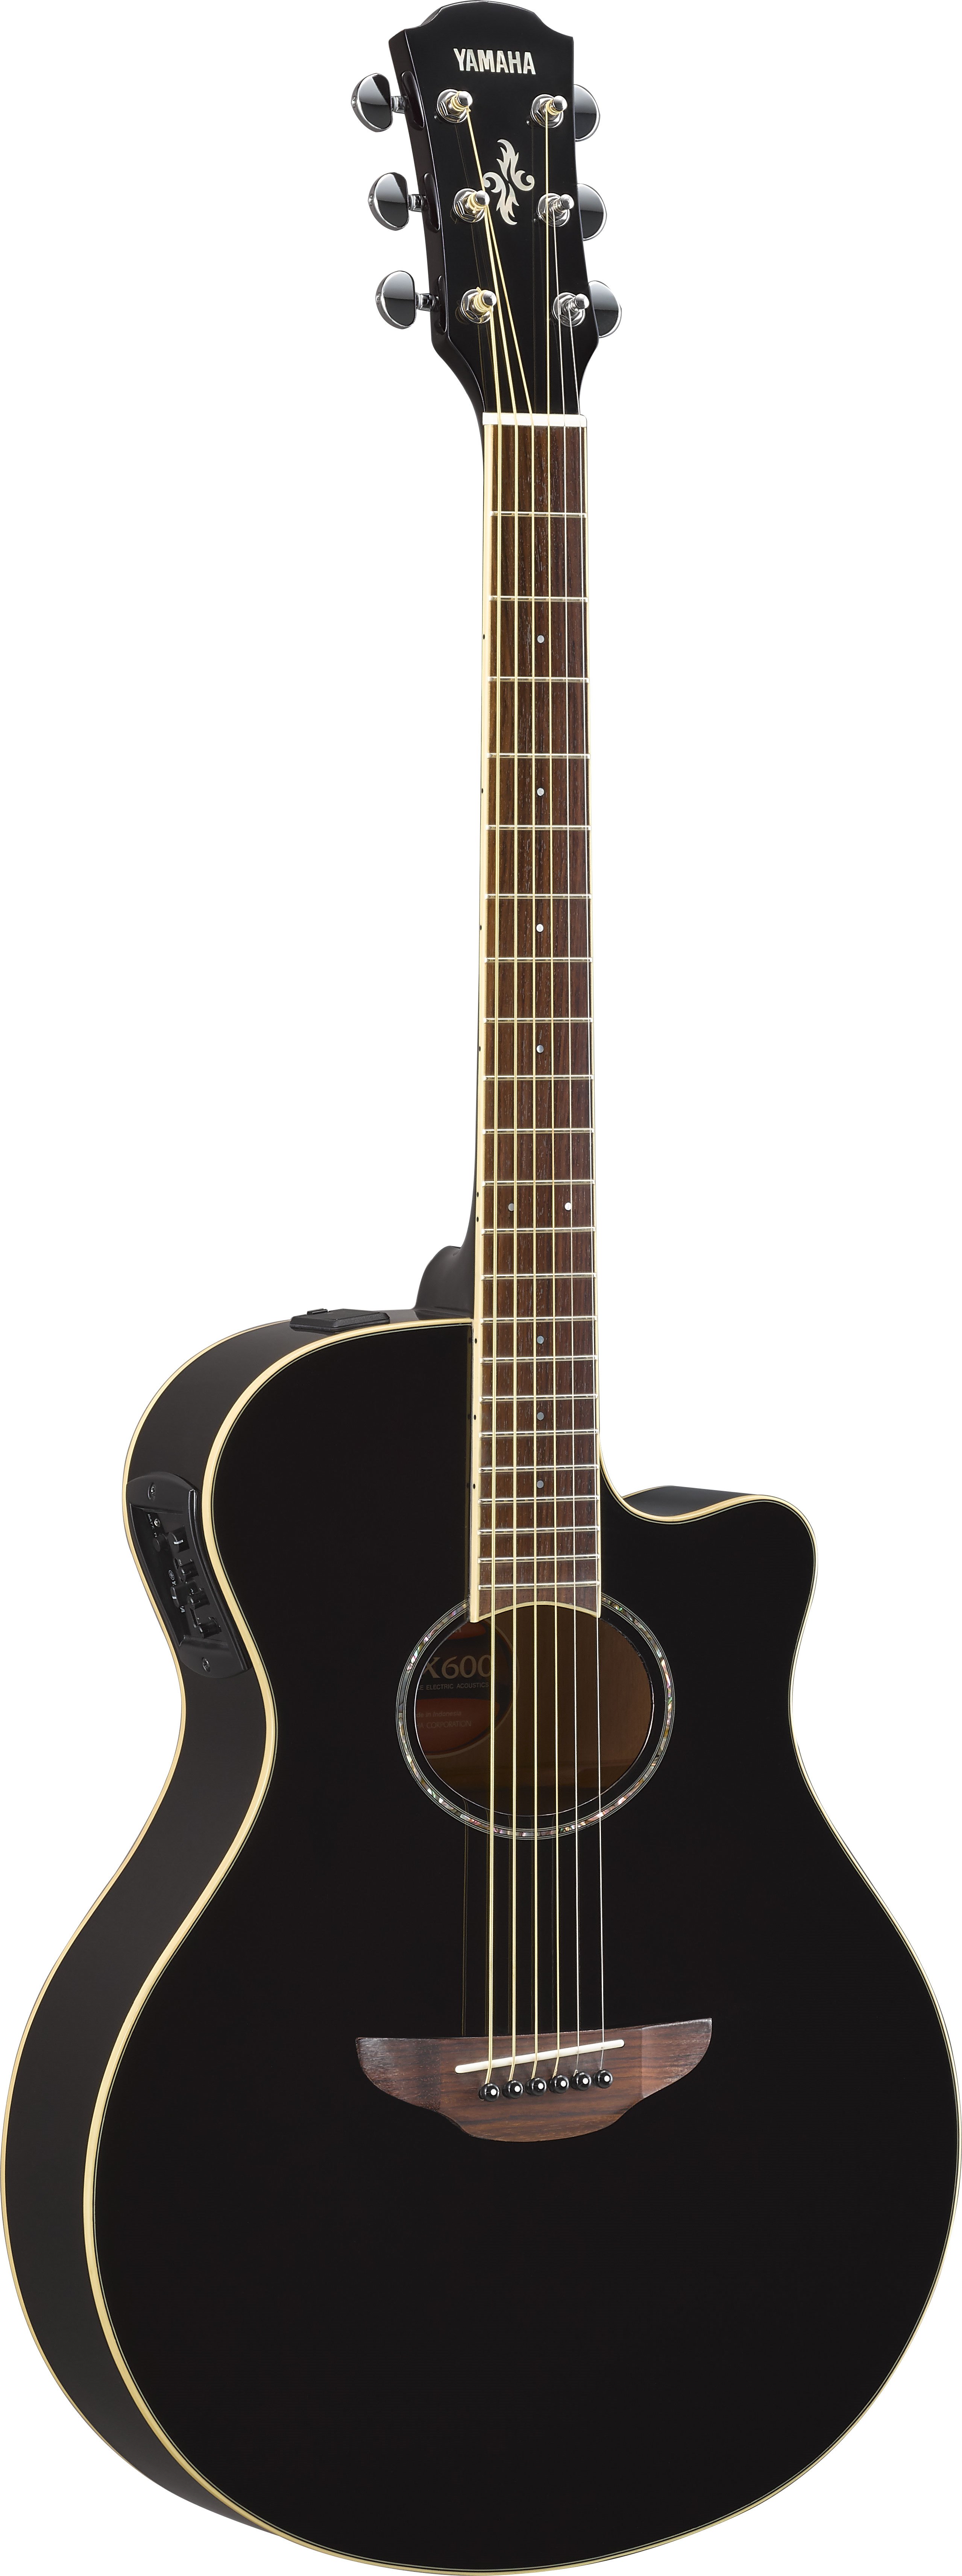 Yamaha Apx600 - Black - Electro acoustic guitar - Variation 2